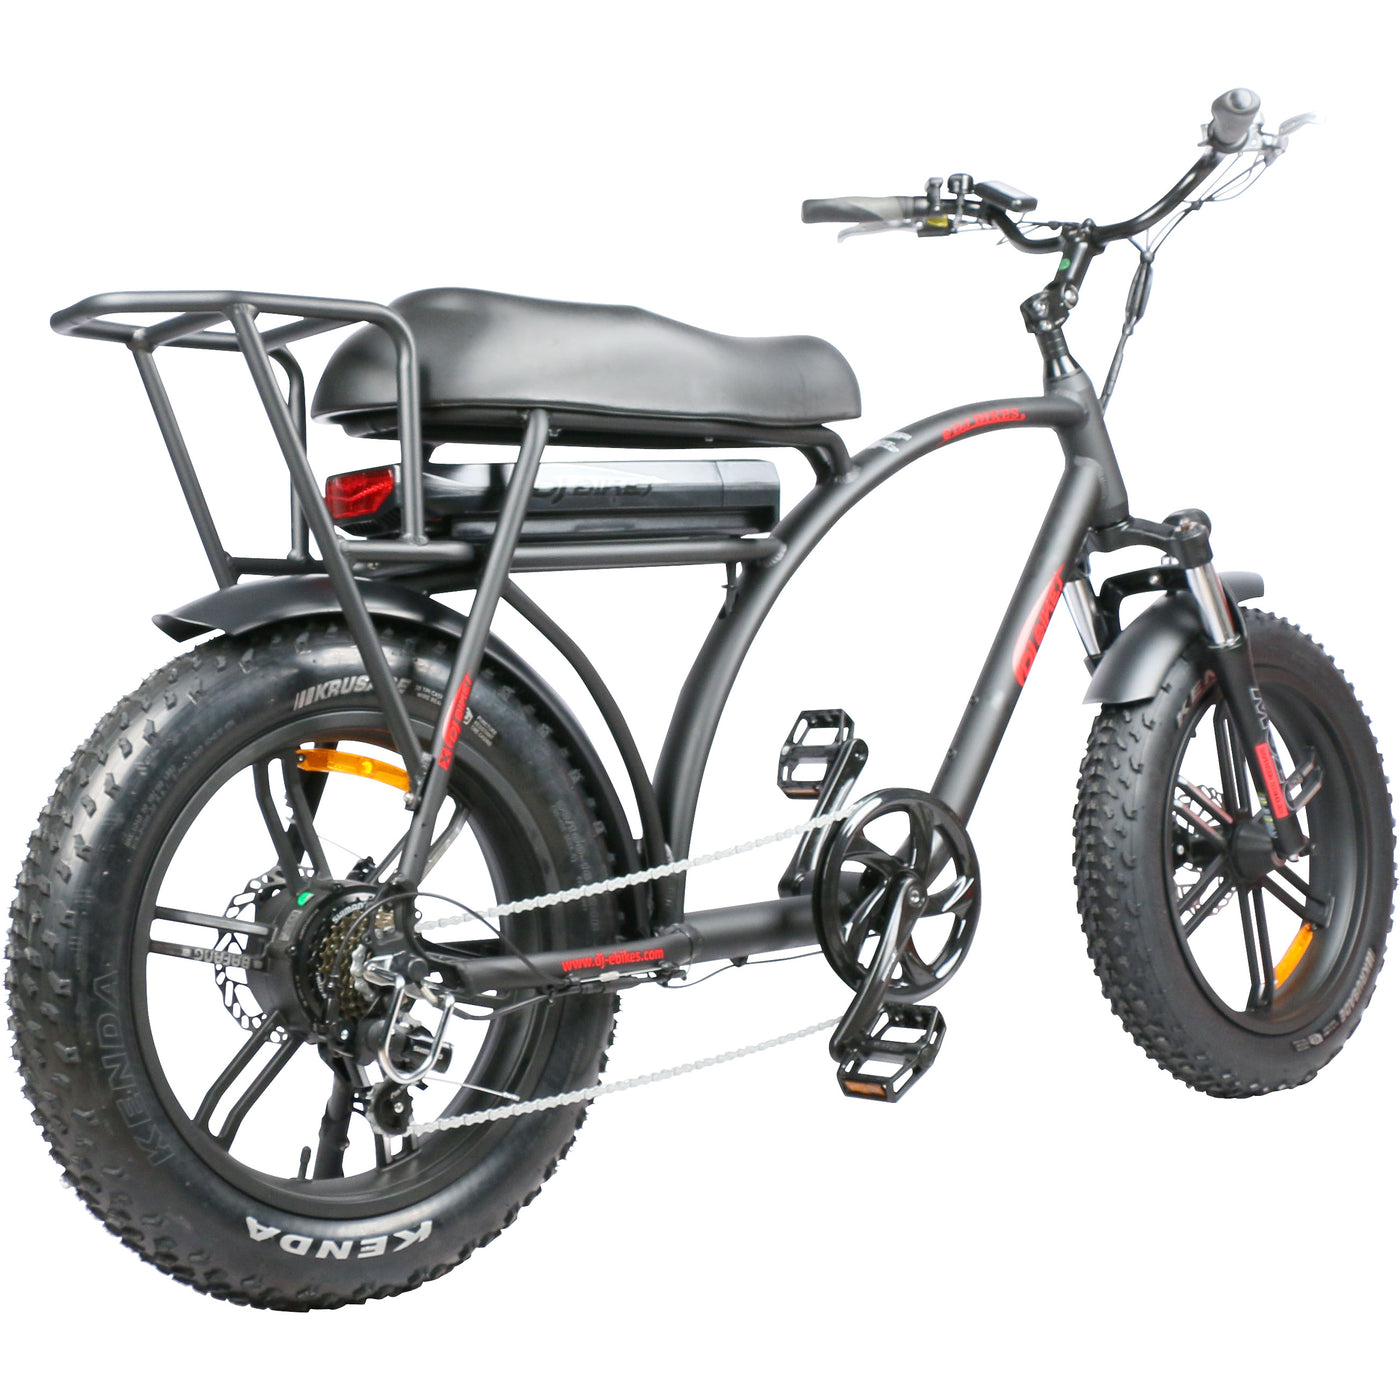 DJ Super Bike, the electric mini bike with 20” fat tires and new rear rack